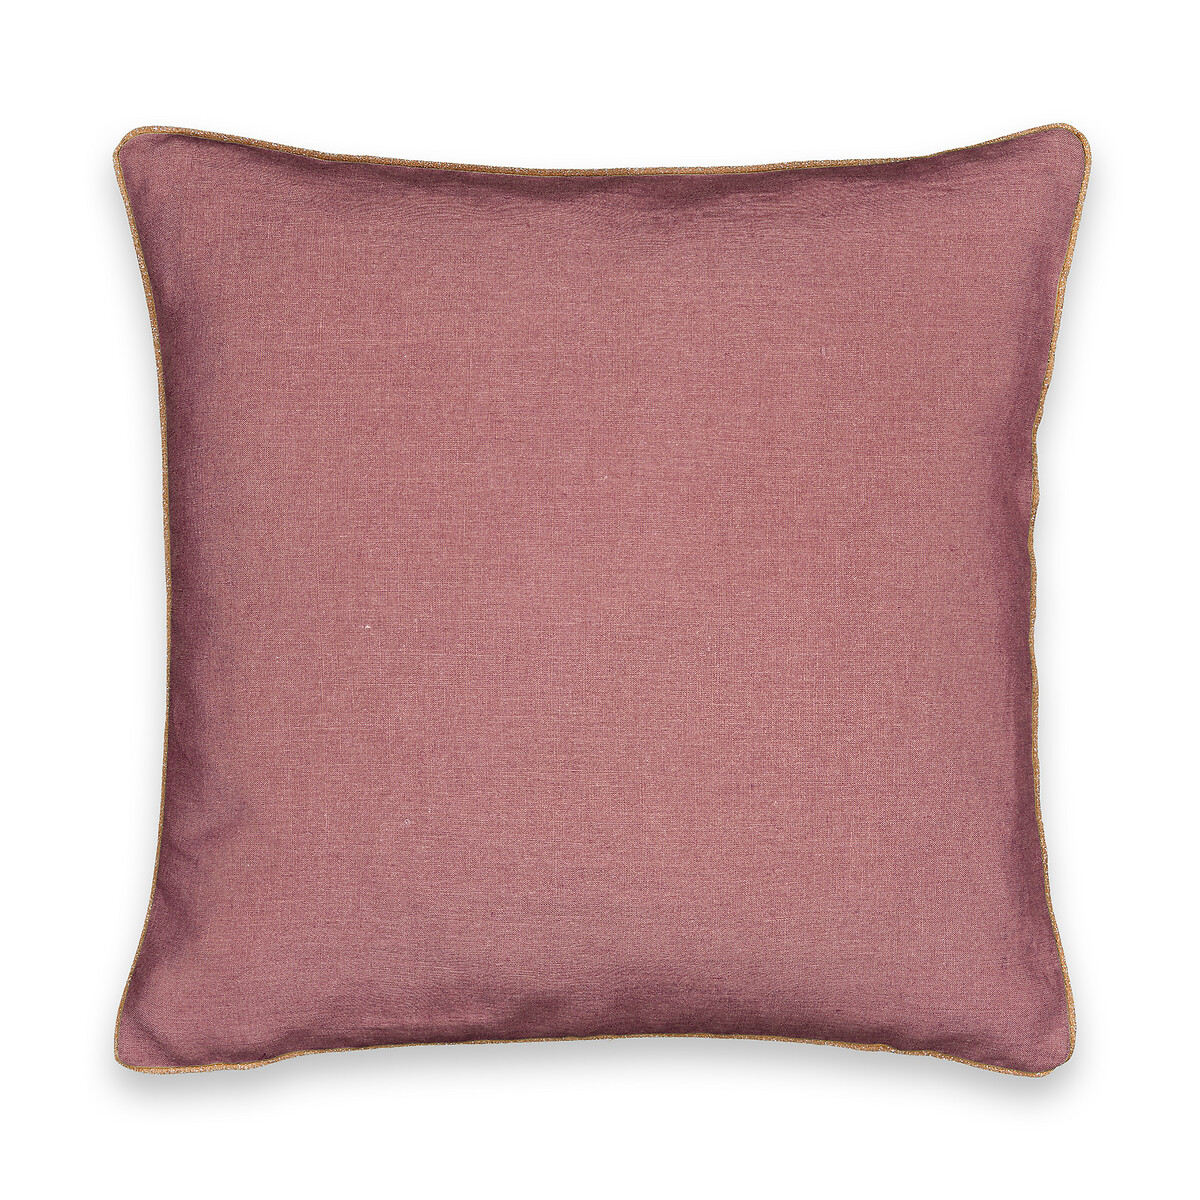 Чехол LaRedoute Для подушки из стираного льна Onega 45 x 45 см розовый, размер 45 x 45 см